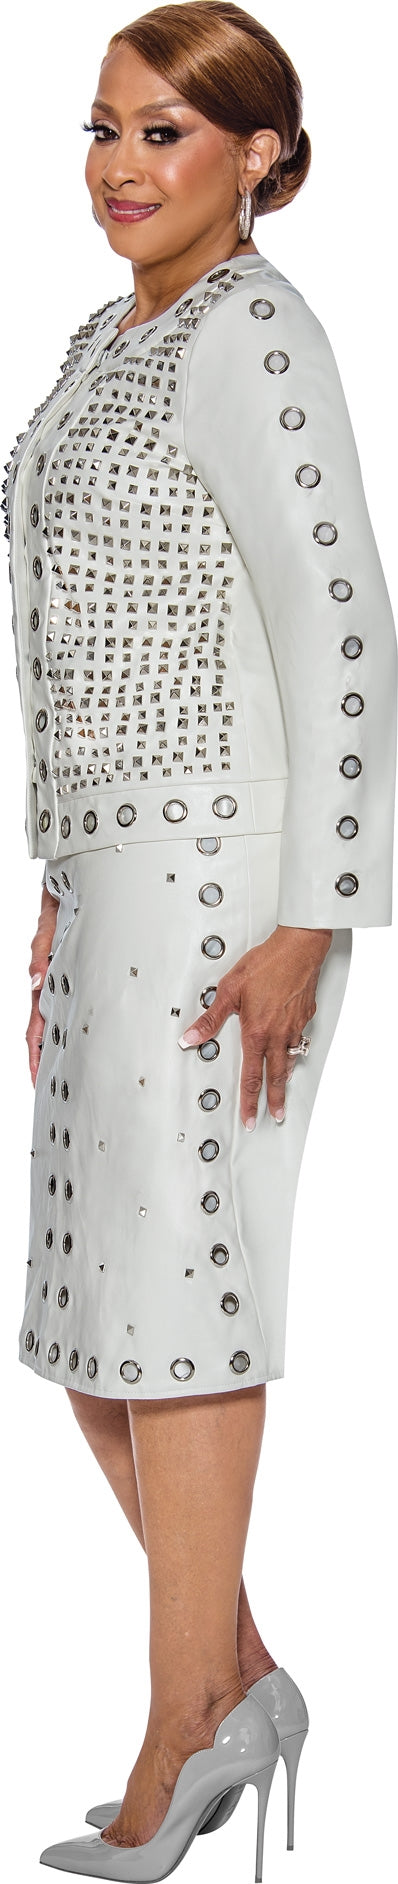 Dorinda Clark Cole skirt set 5222 - Church Suits For Less